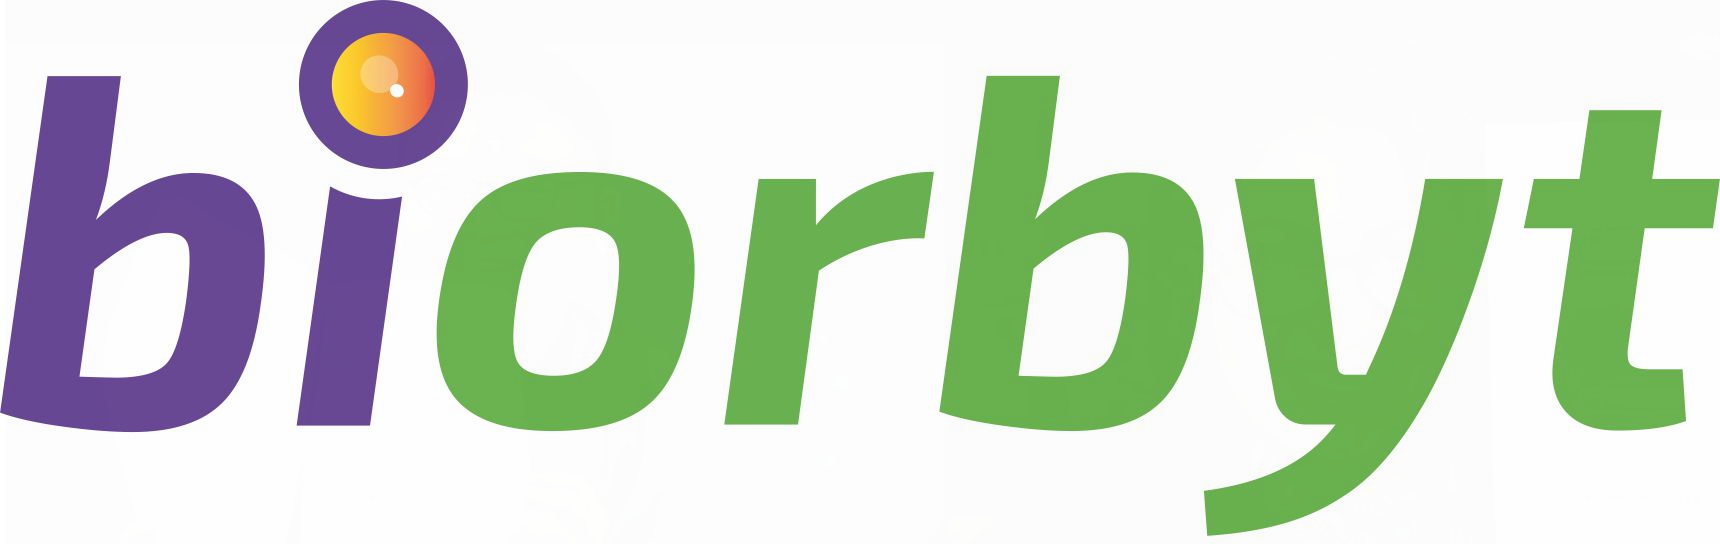 biorbyt-hejuru-res-logo-nta-umurongo